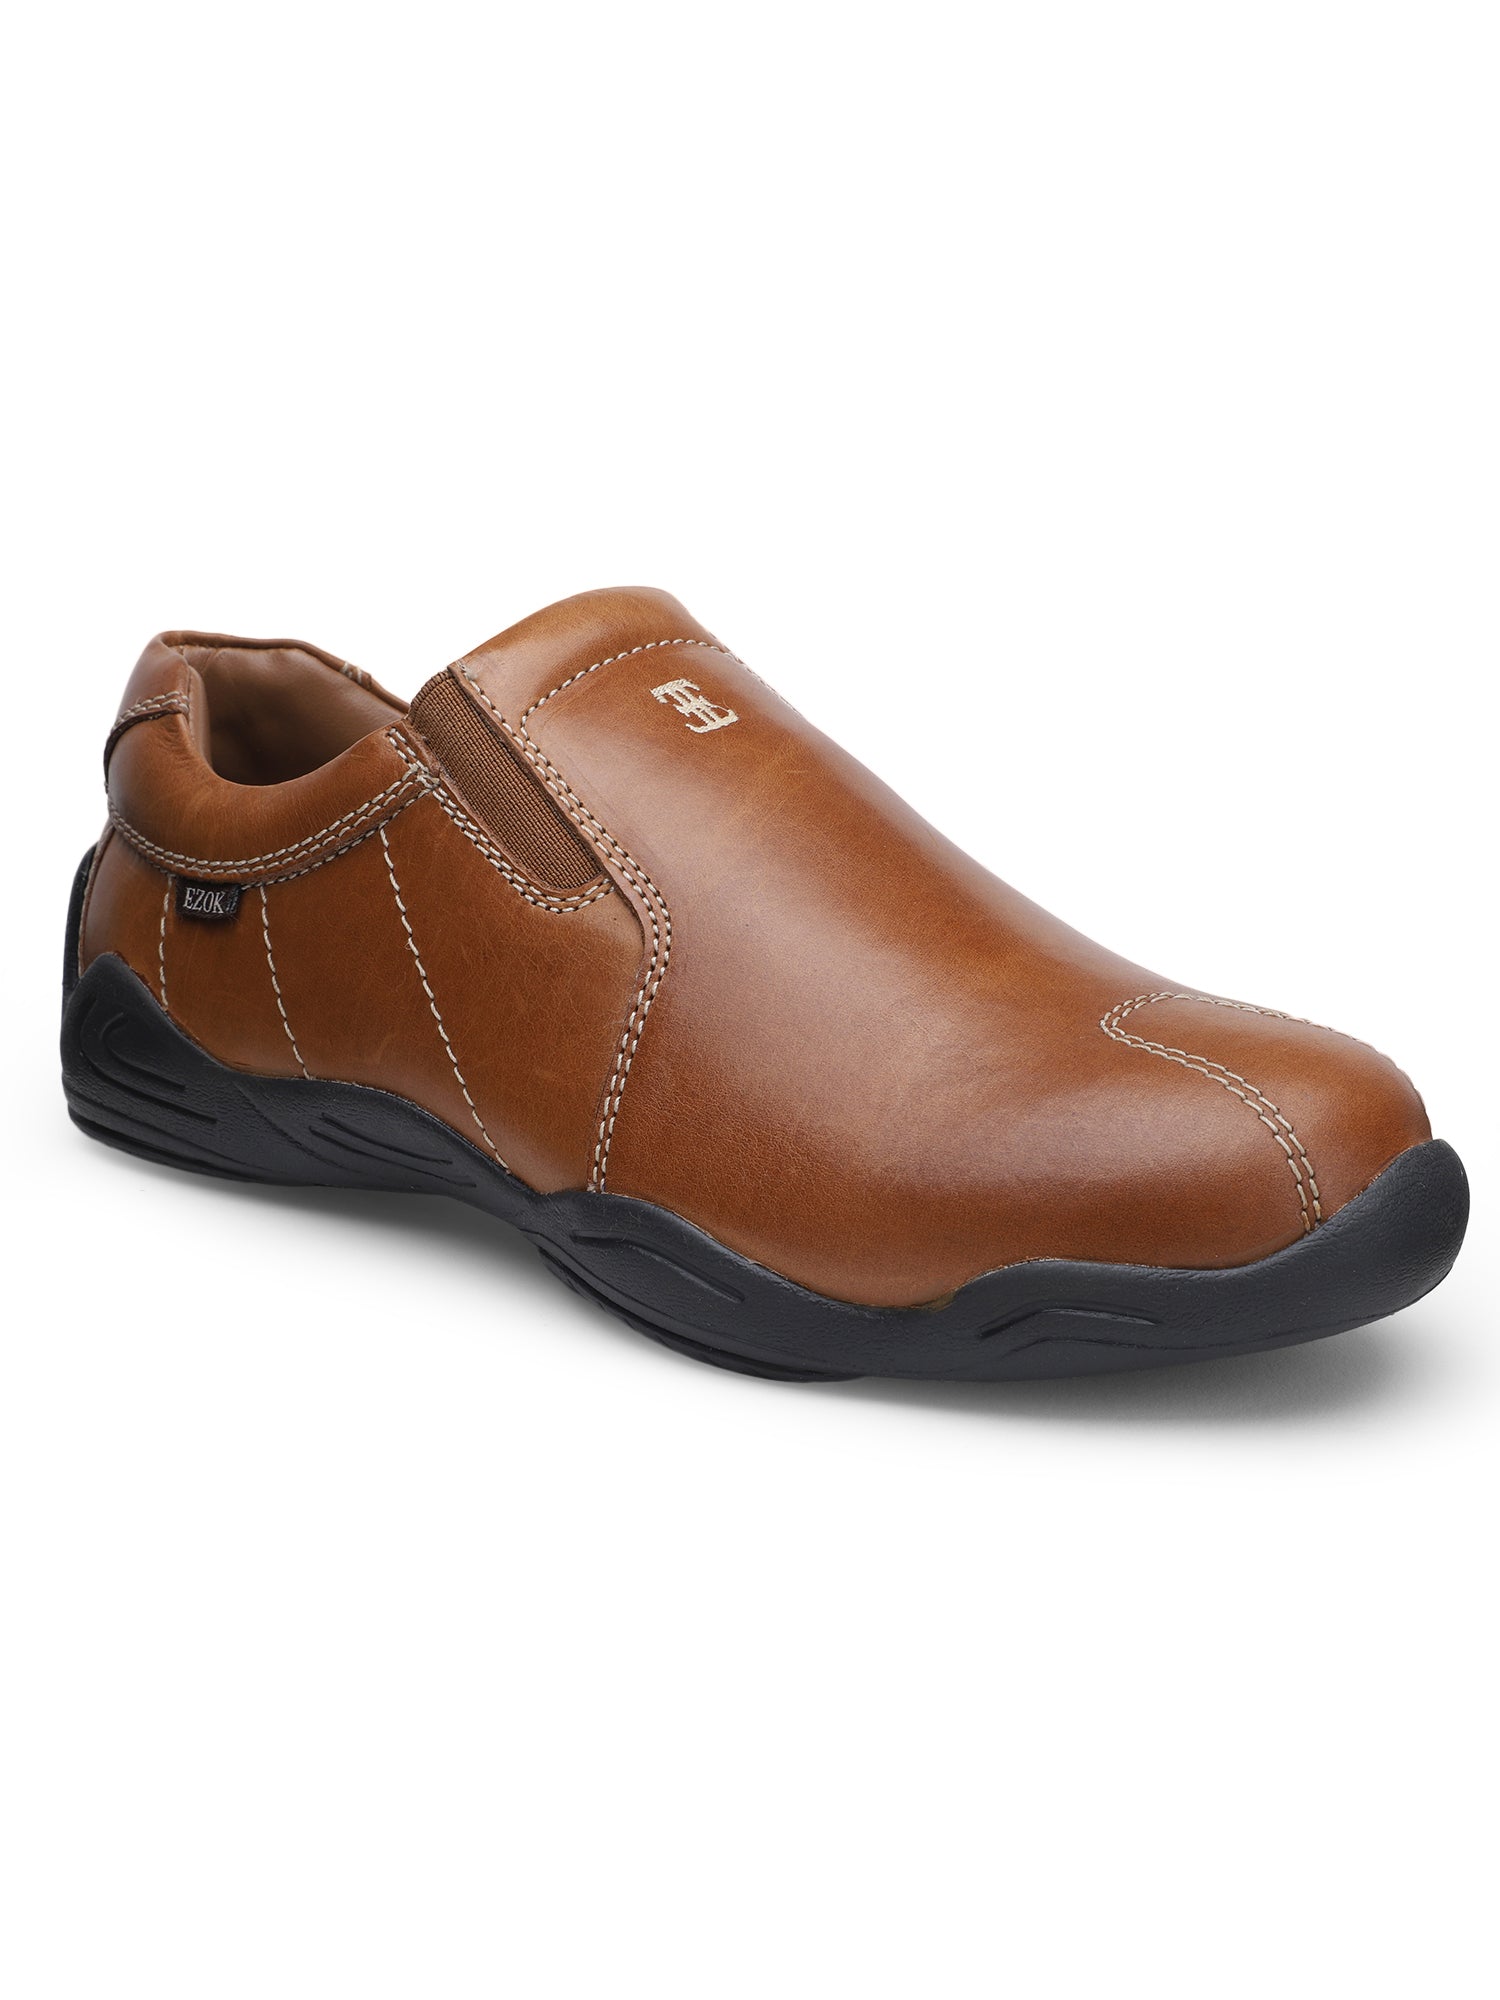 Ezok Men Tan Leather Casual Shoes